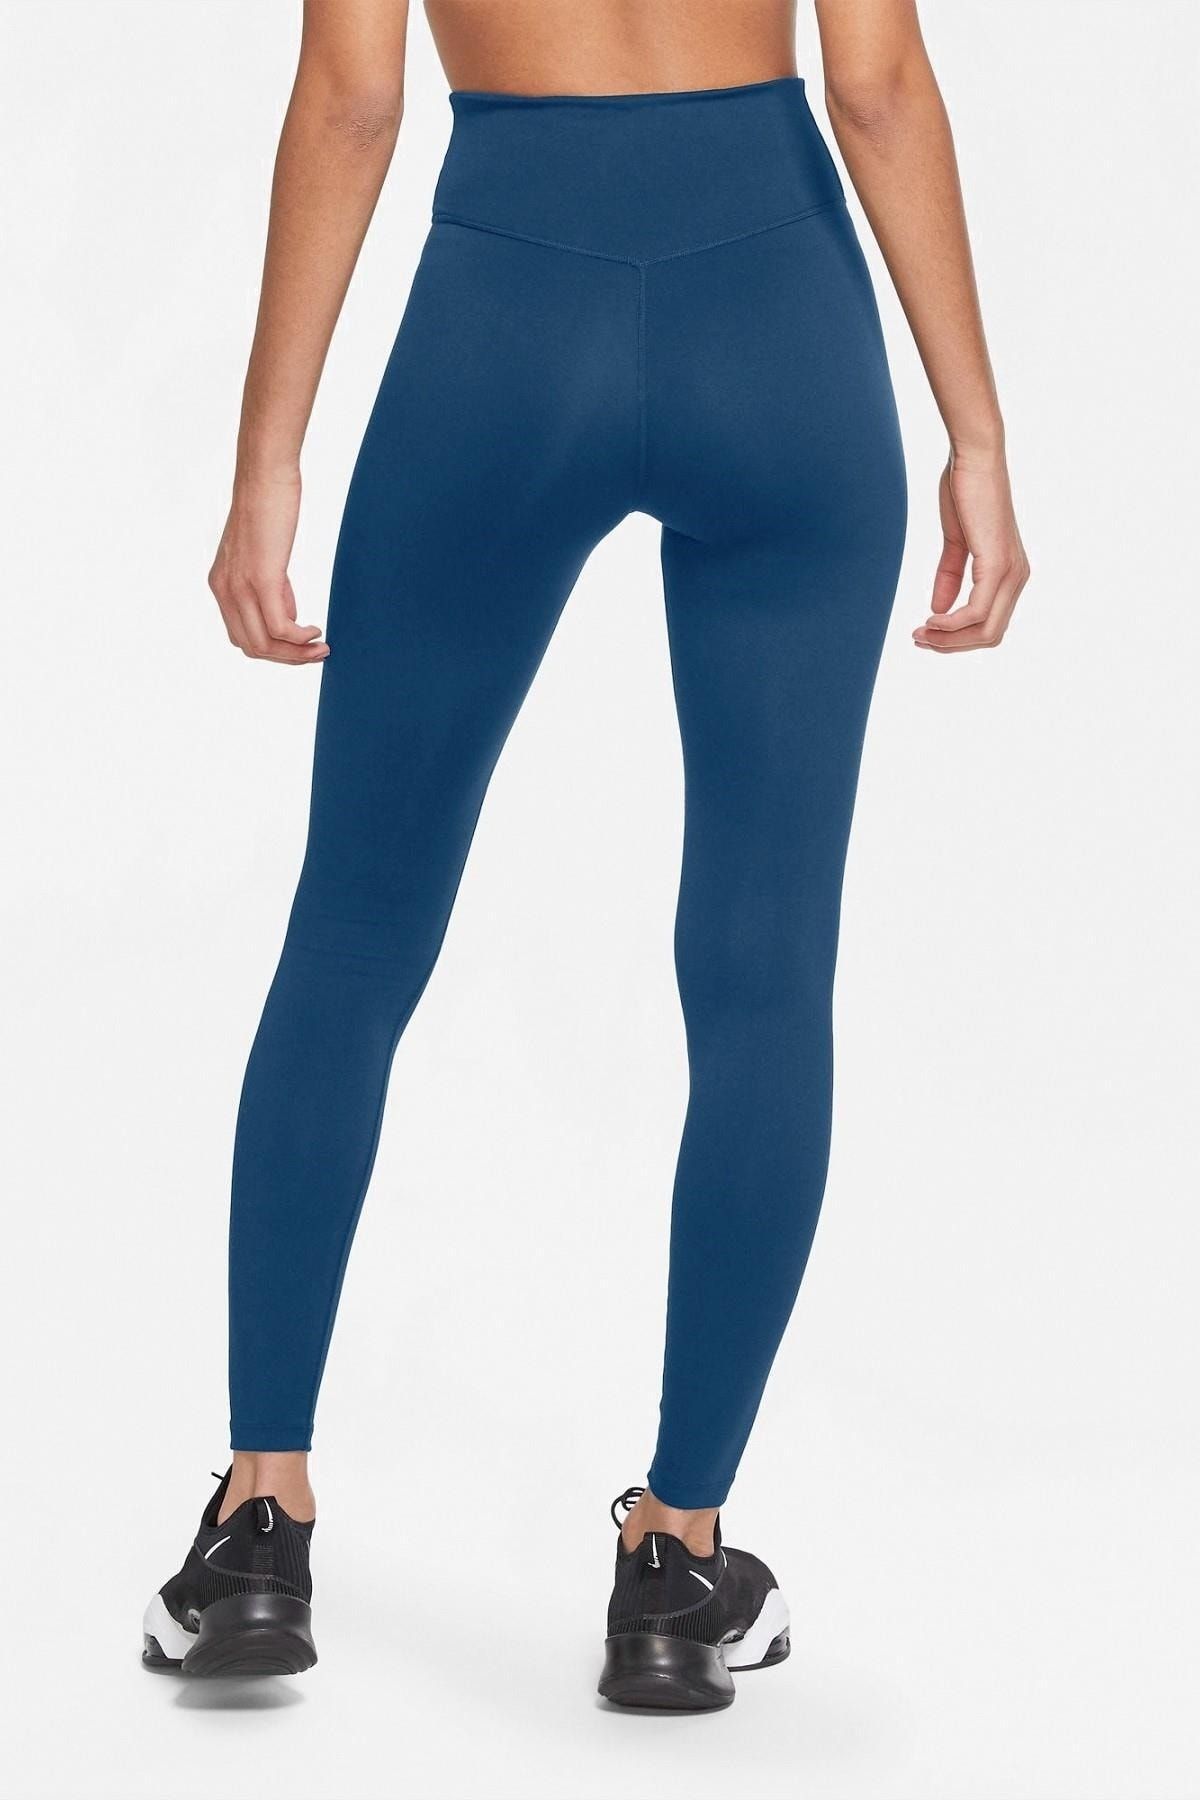 Blue Staying Warm Pockets Tights & Leggings. Nike CA